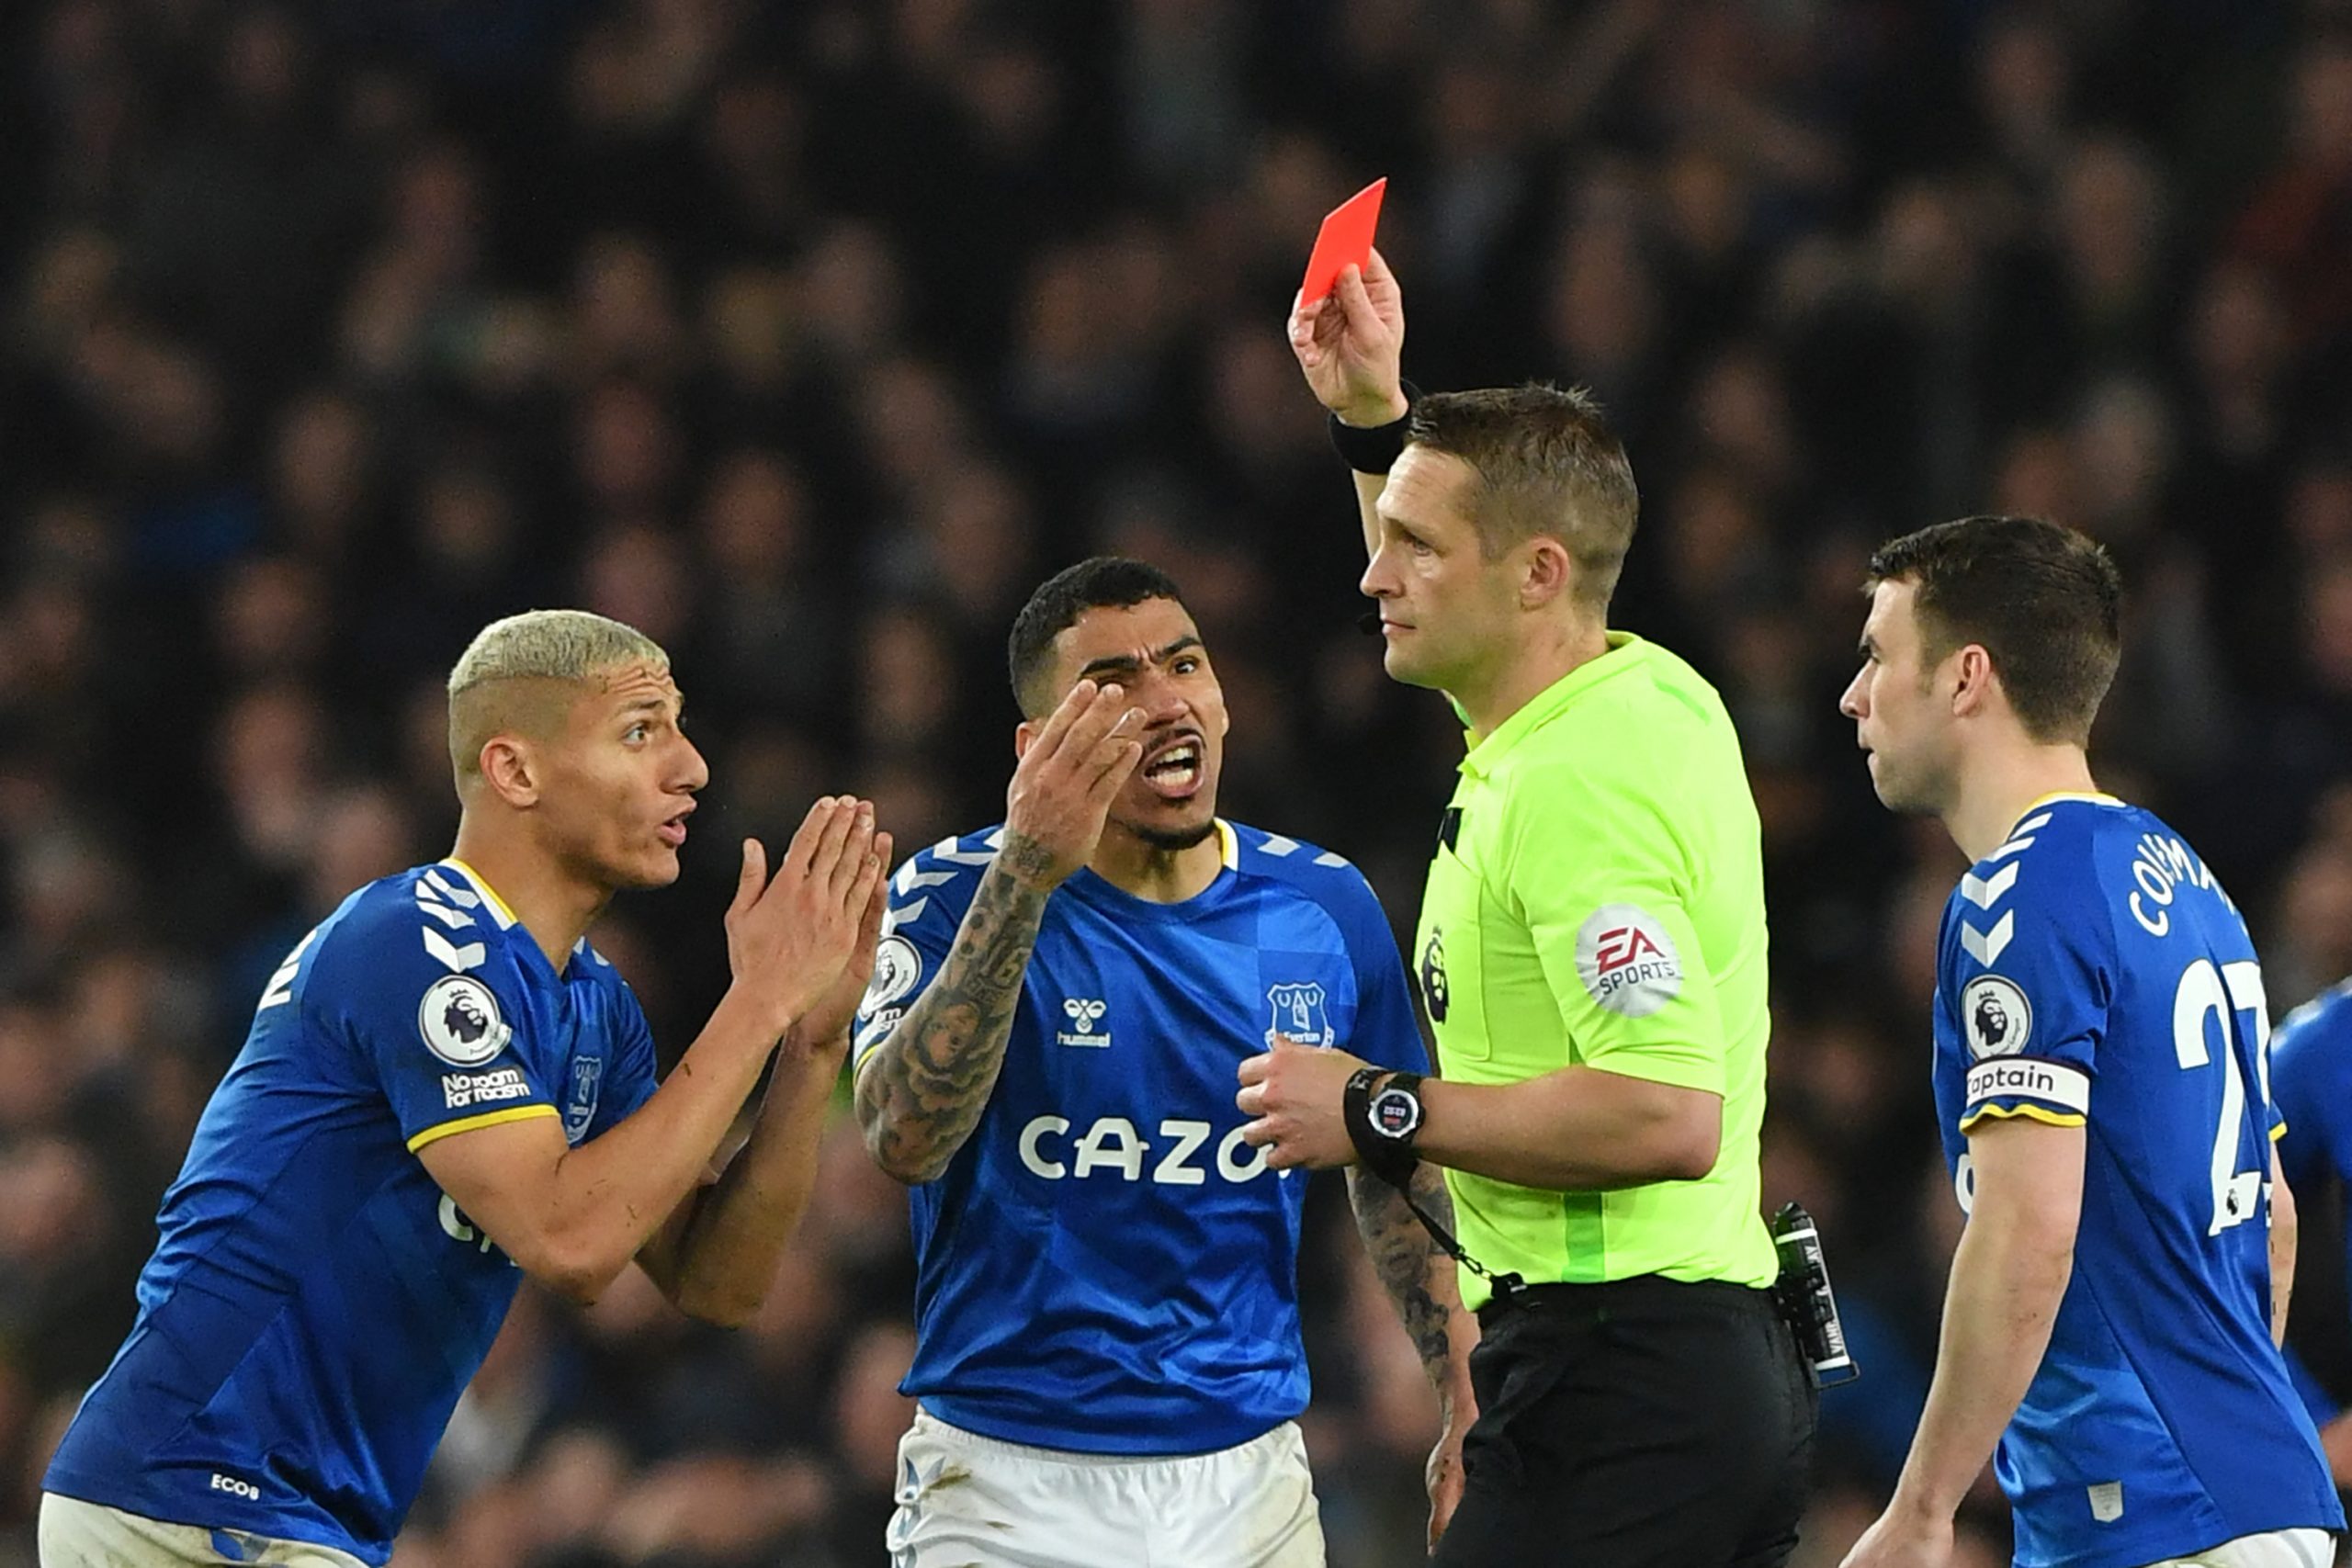 Everton midfielder Allan receiving marching order